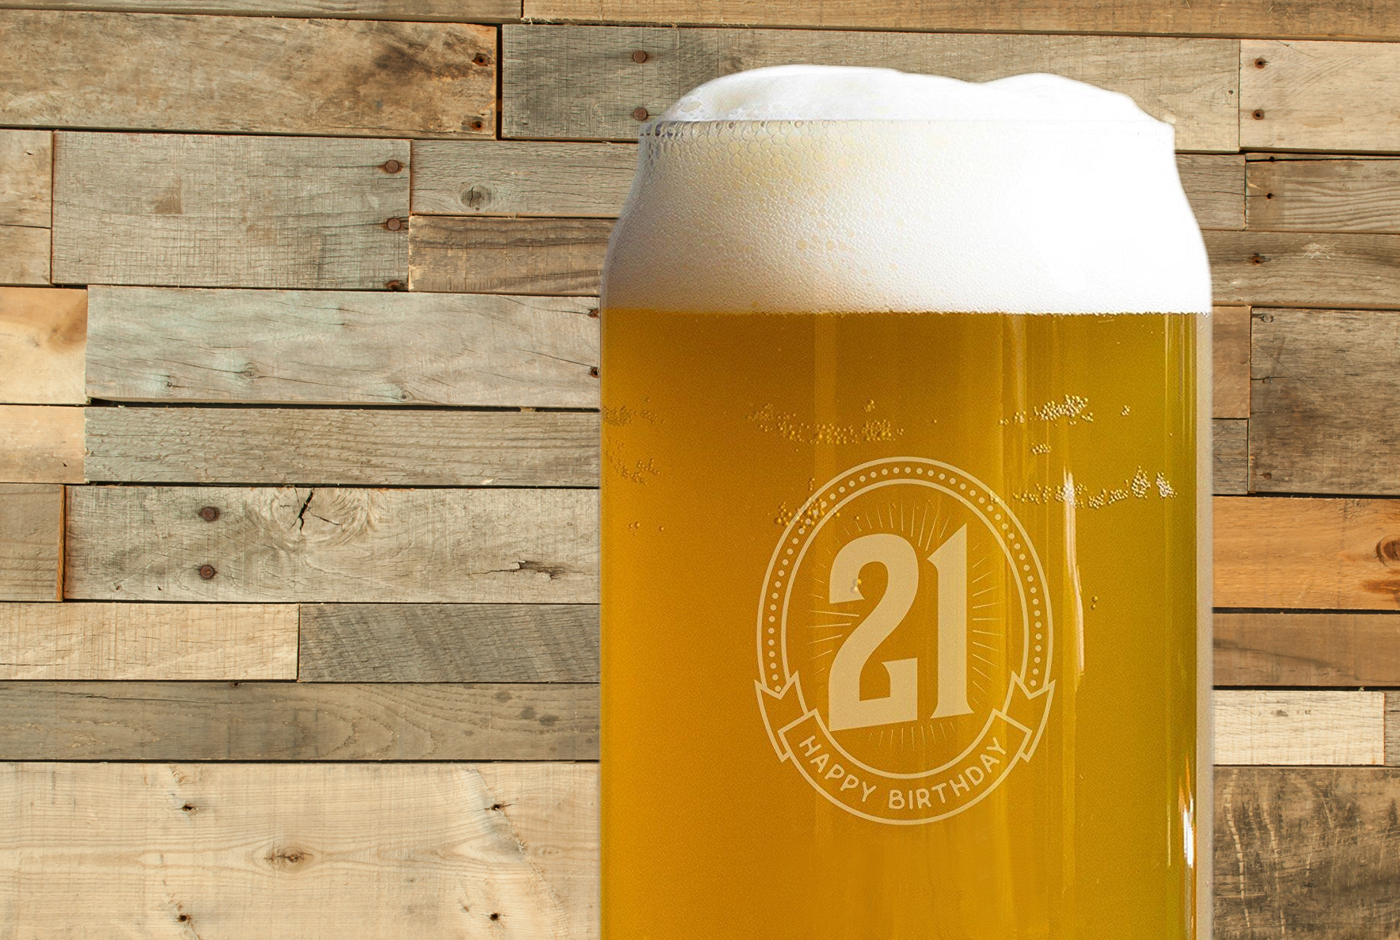 Craft-Beer-21-Run-Peaks-and-Pints-Tacoma-Calendar